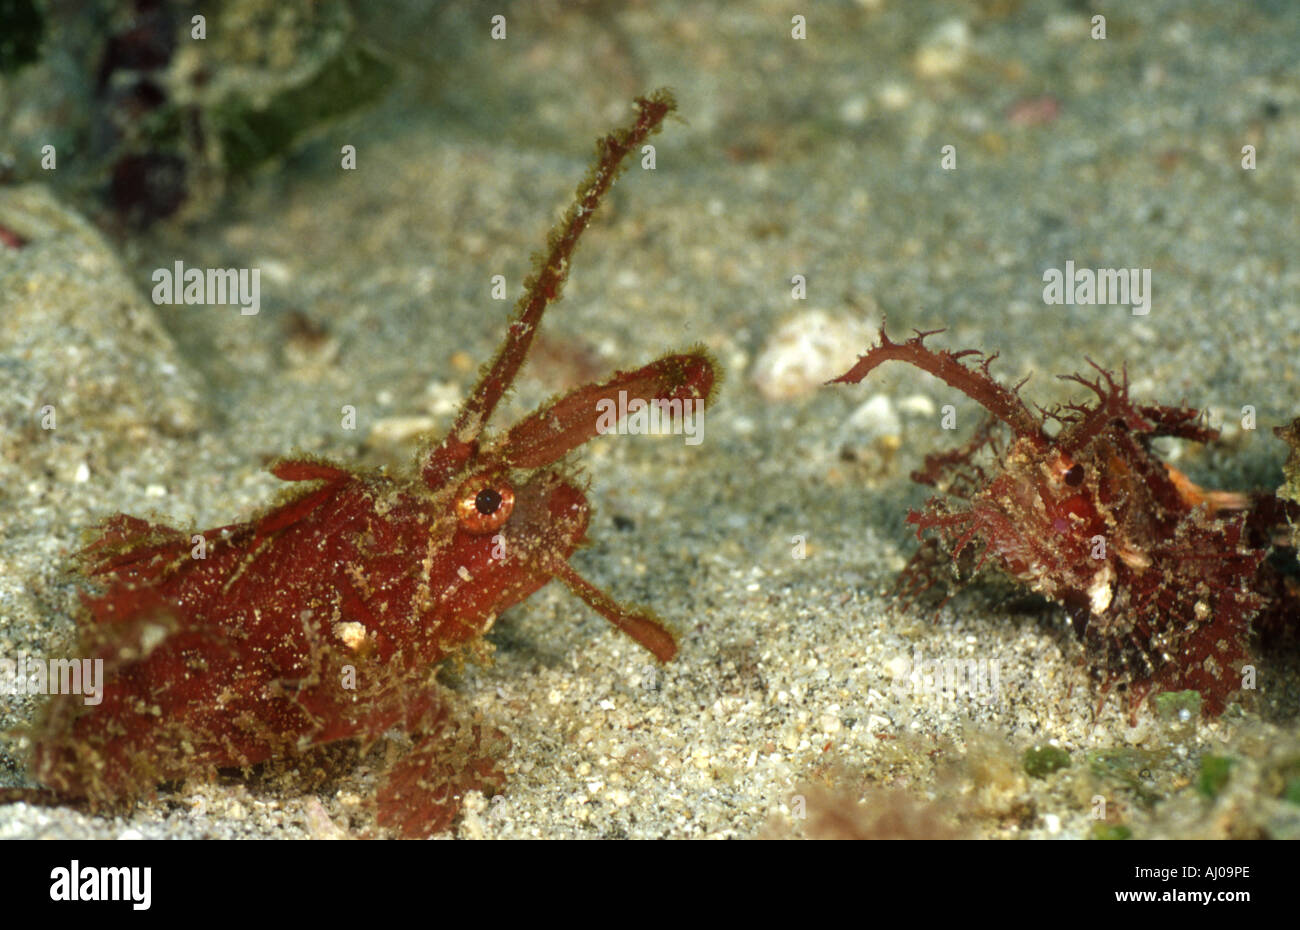 A pair of Ambon scorpion fish (Pteroidichthys amboinensis) on the sandy bottom... Stock Photo